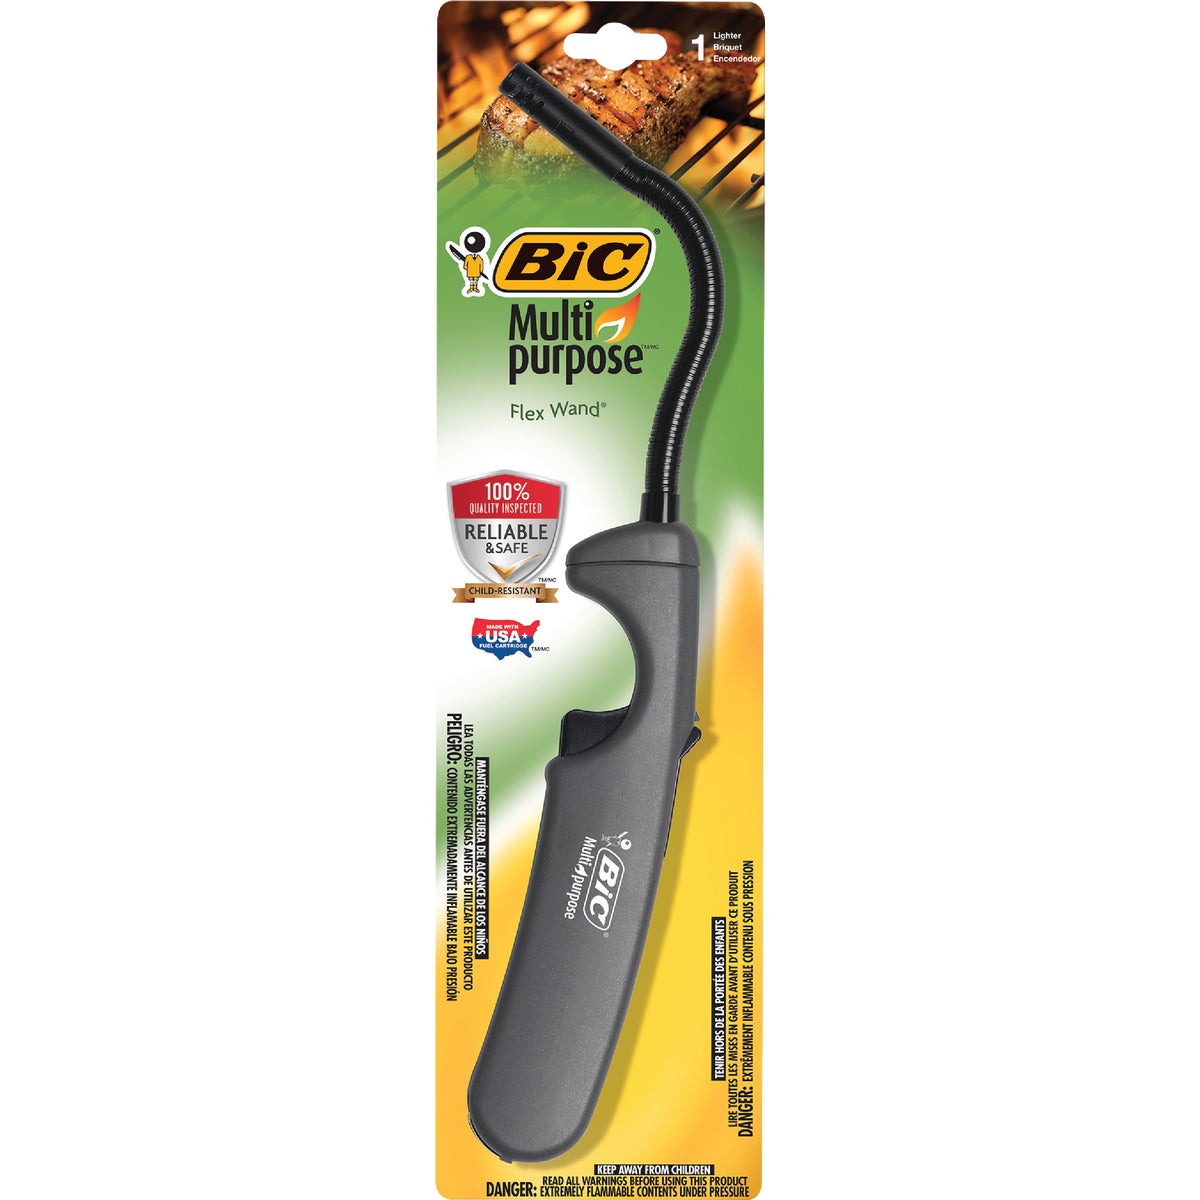 Item 819225, Bic flexible tip utility lighter. Child resistant lighter. Many uses.